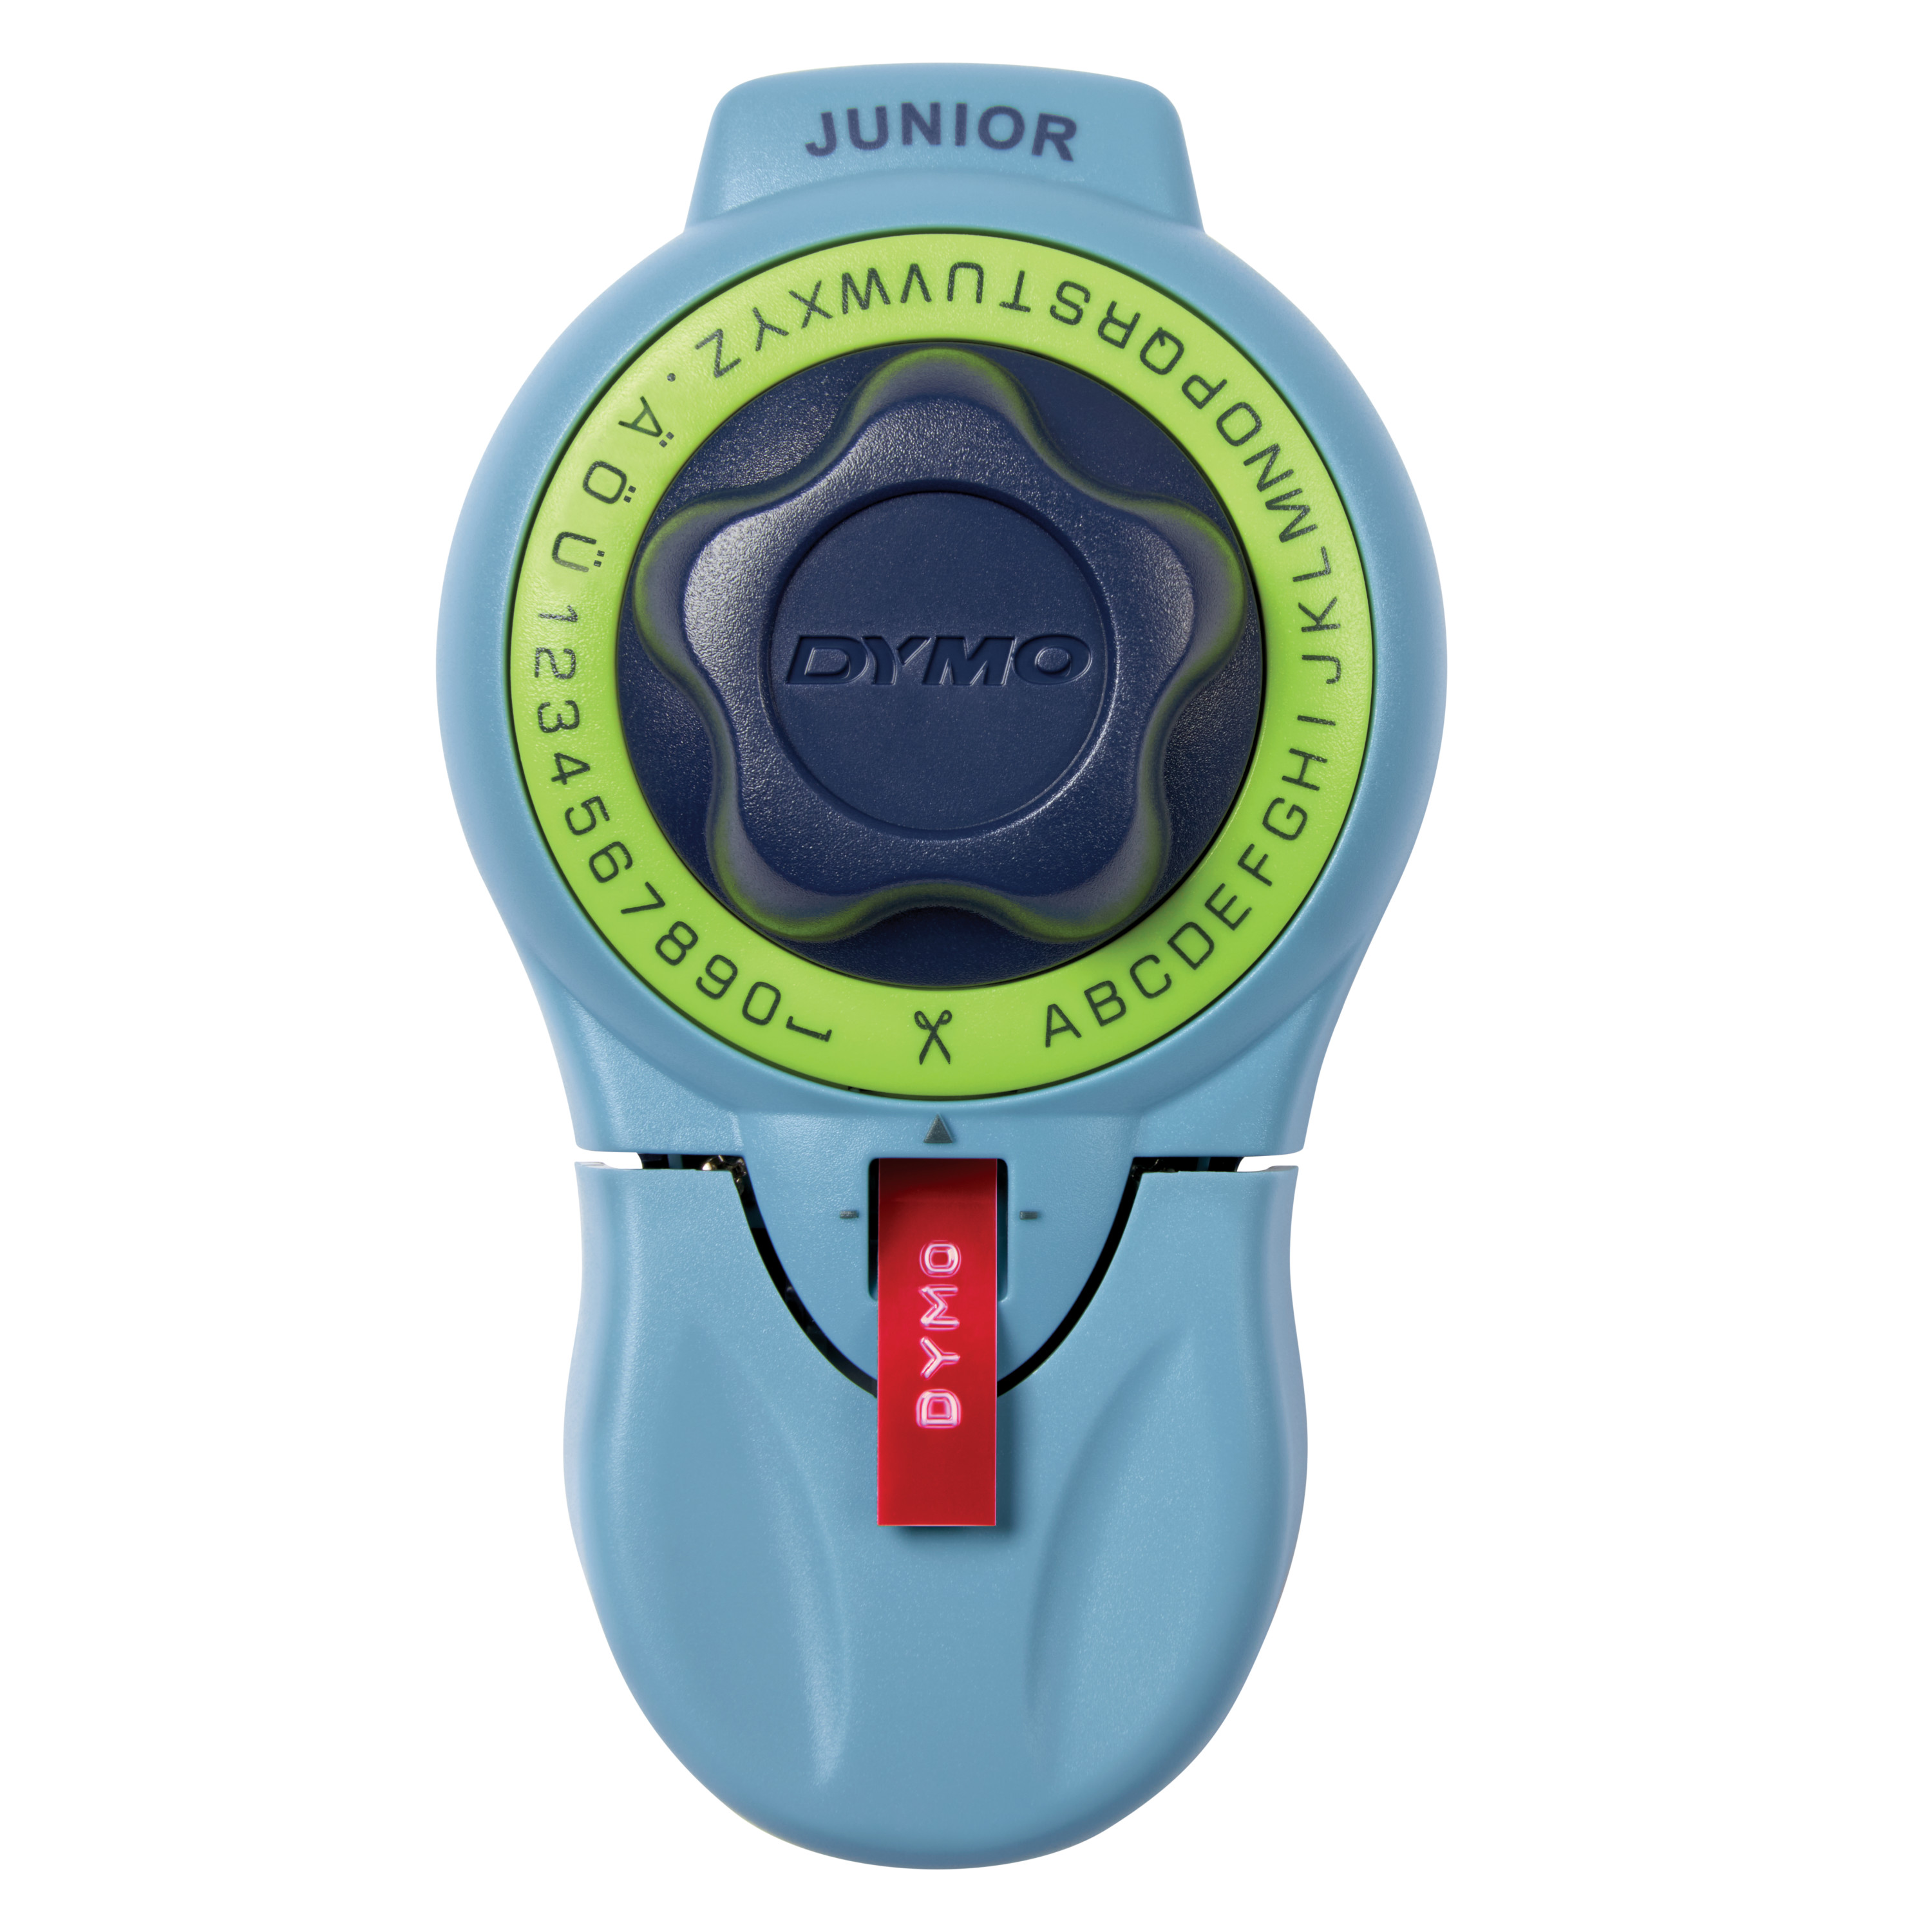 DYMO Junior Prägegerät - Etikettiergerät für Zuhause Blister